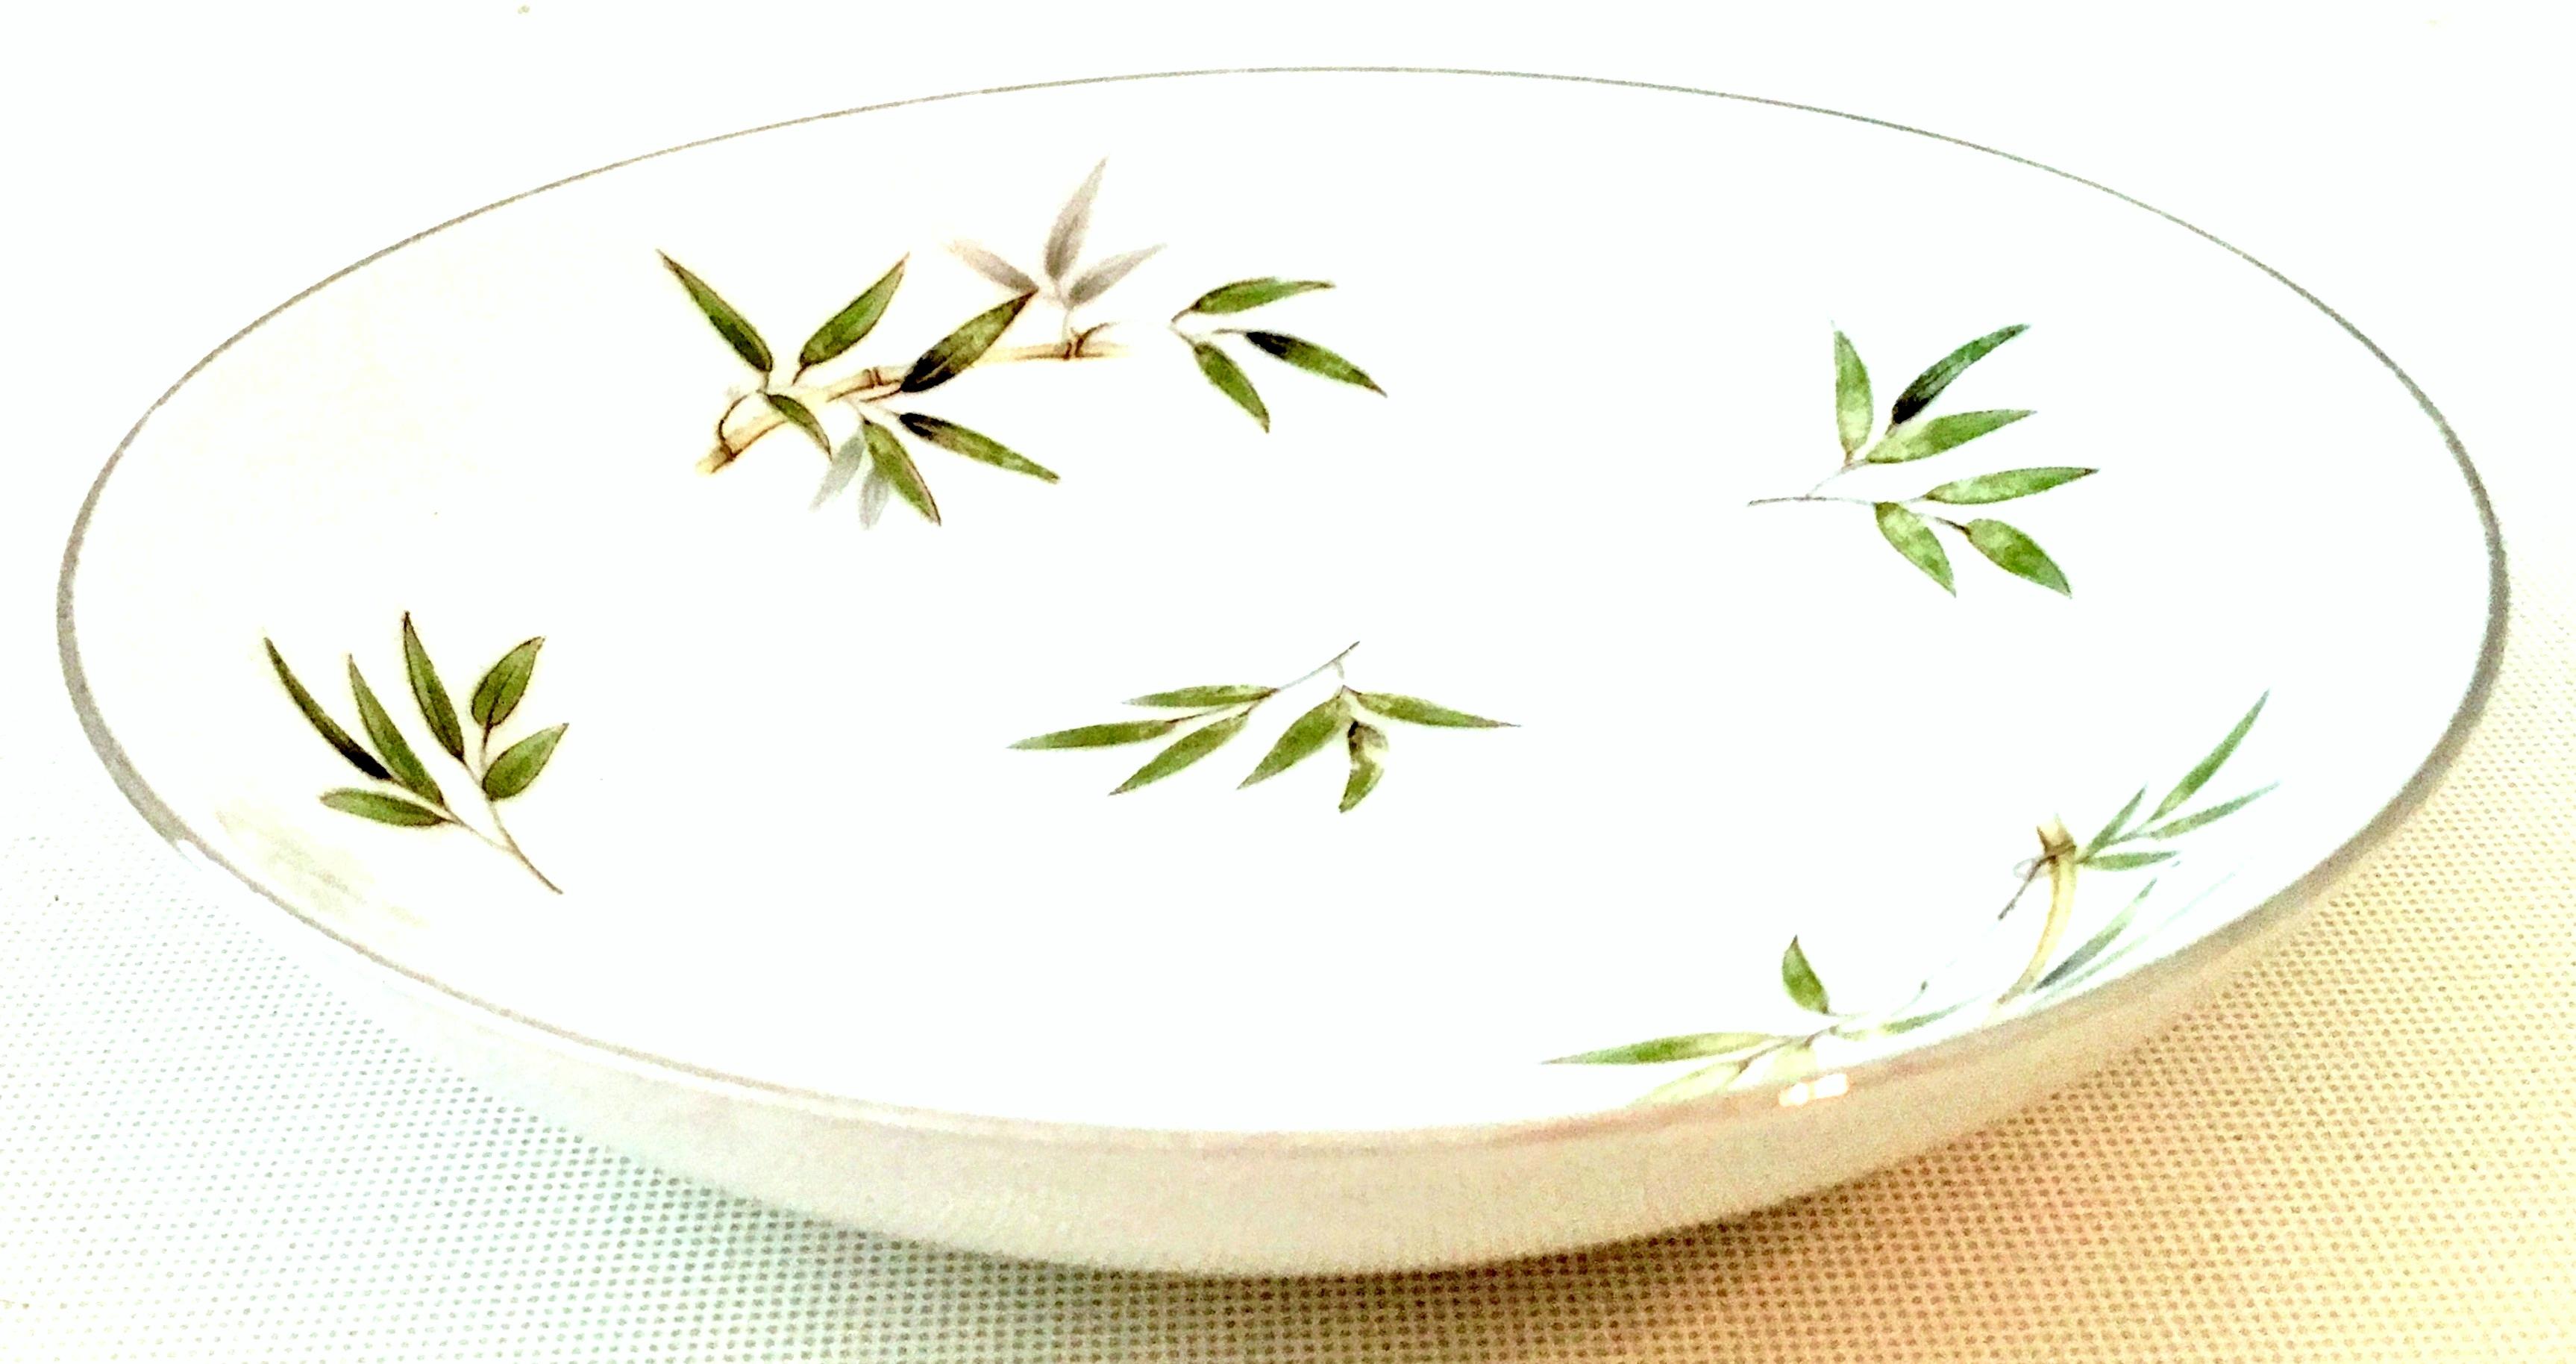 japanese dinnerware set